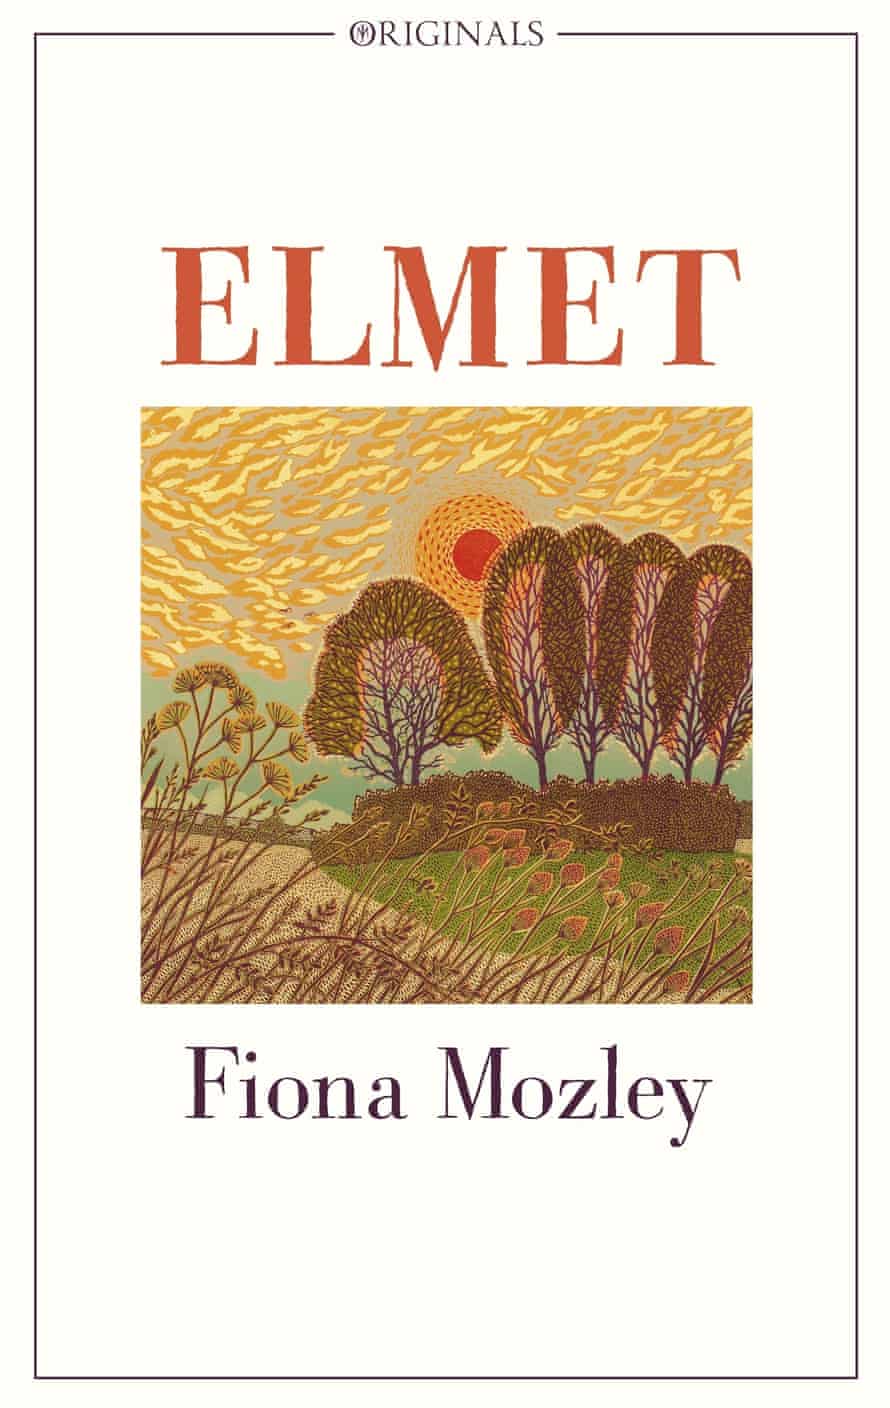 Elmet Fiona Mozley